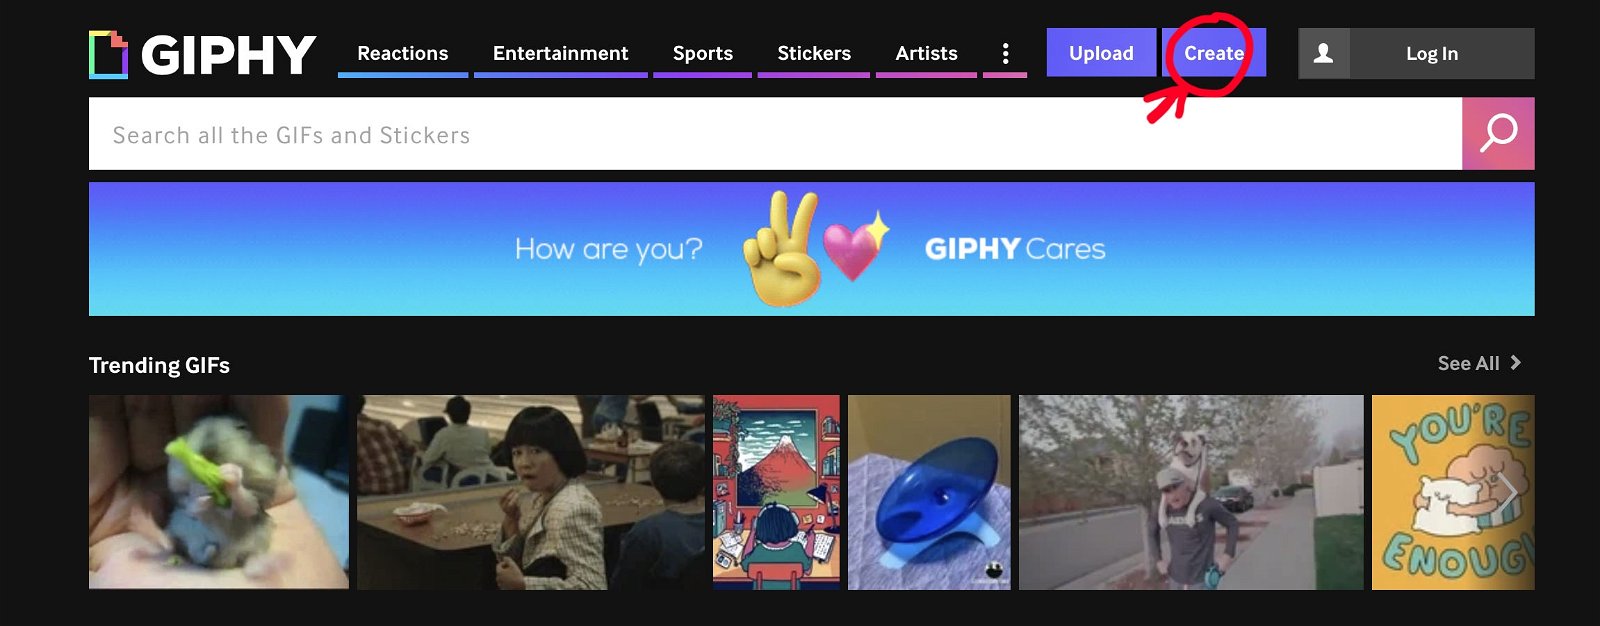 Captura de pantalla de la web de Giphy